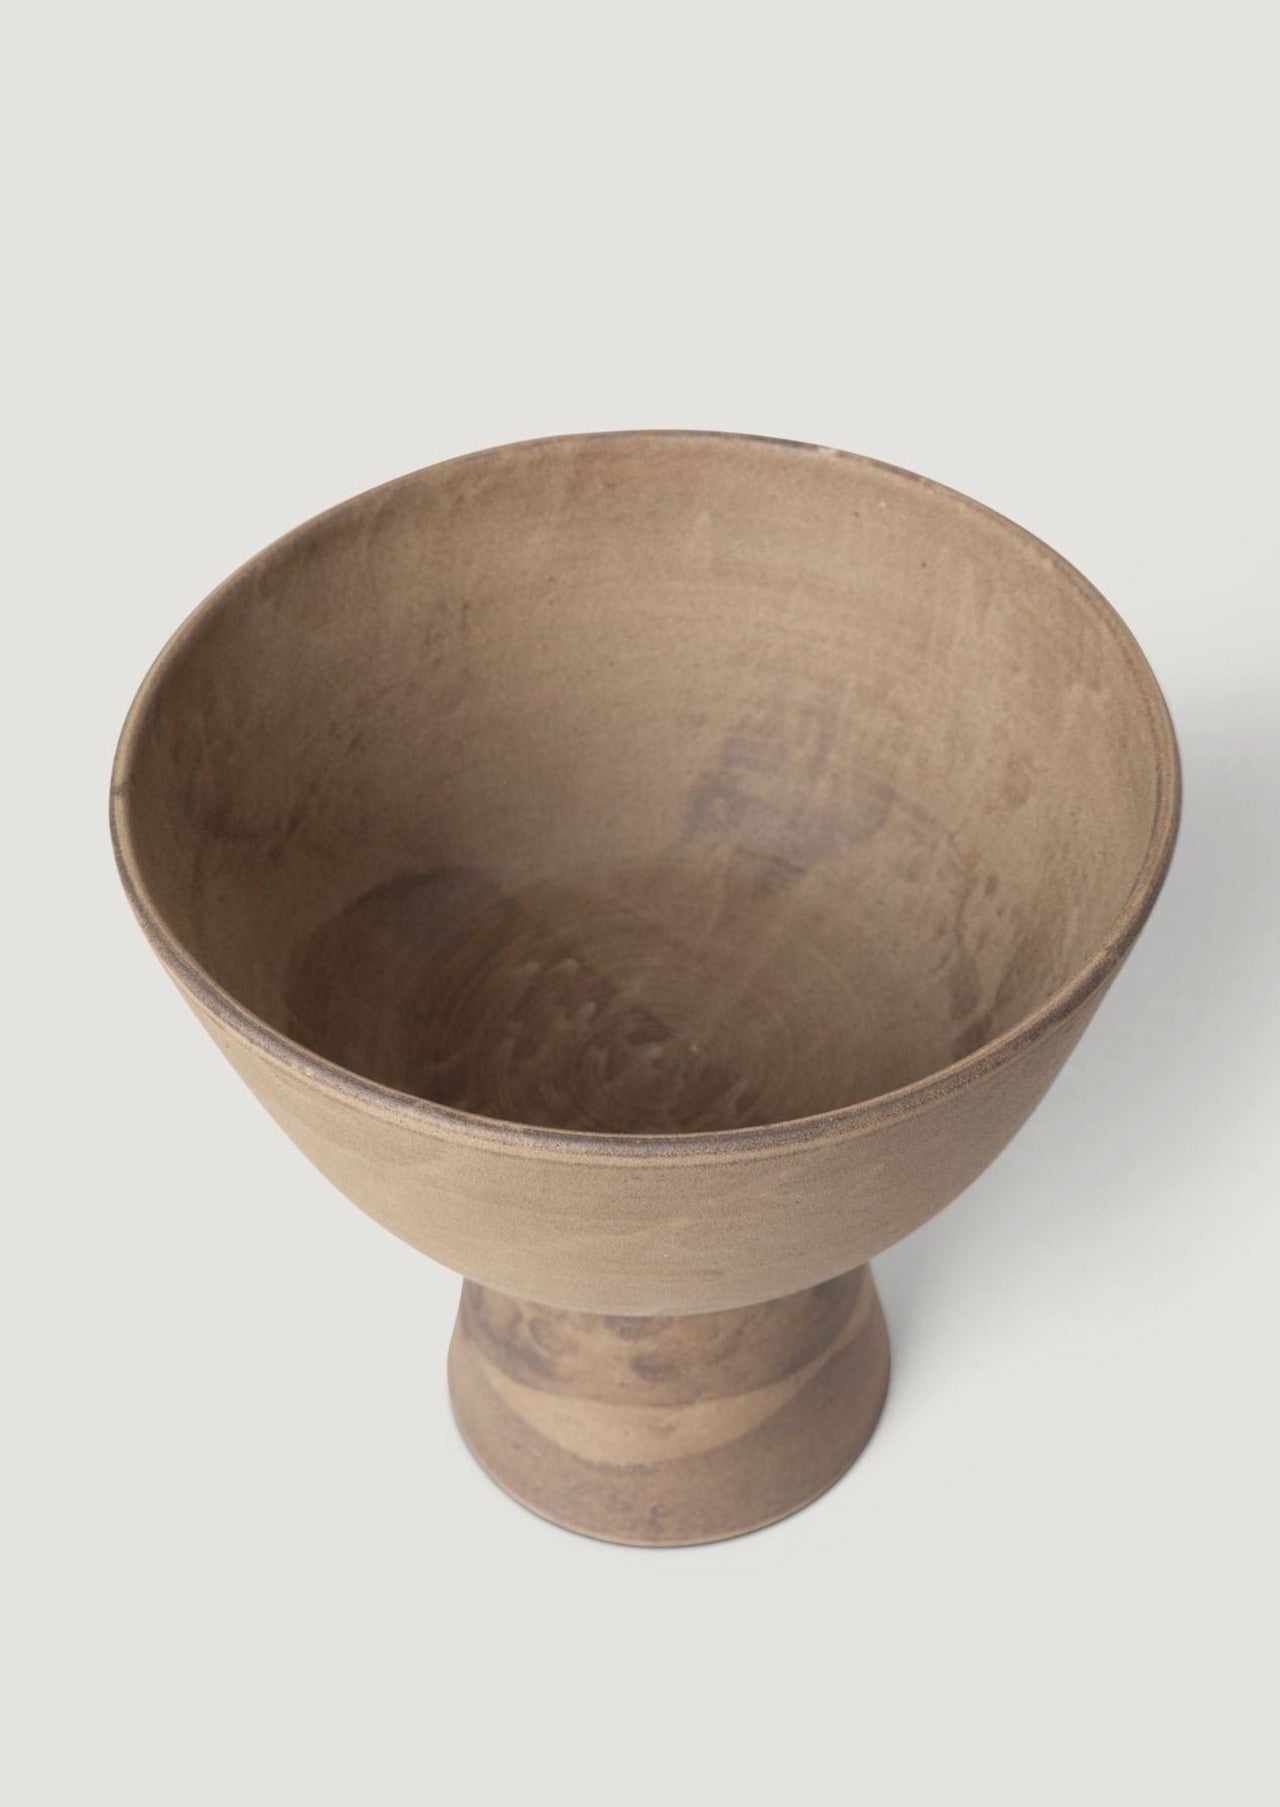 Footed Bowl Vase in Earthy Brown